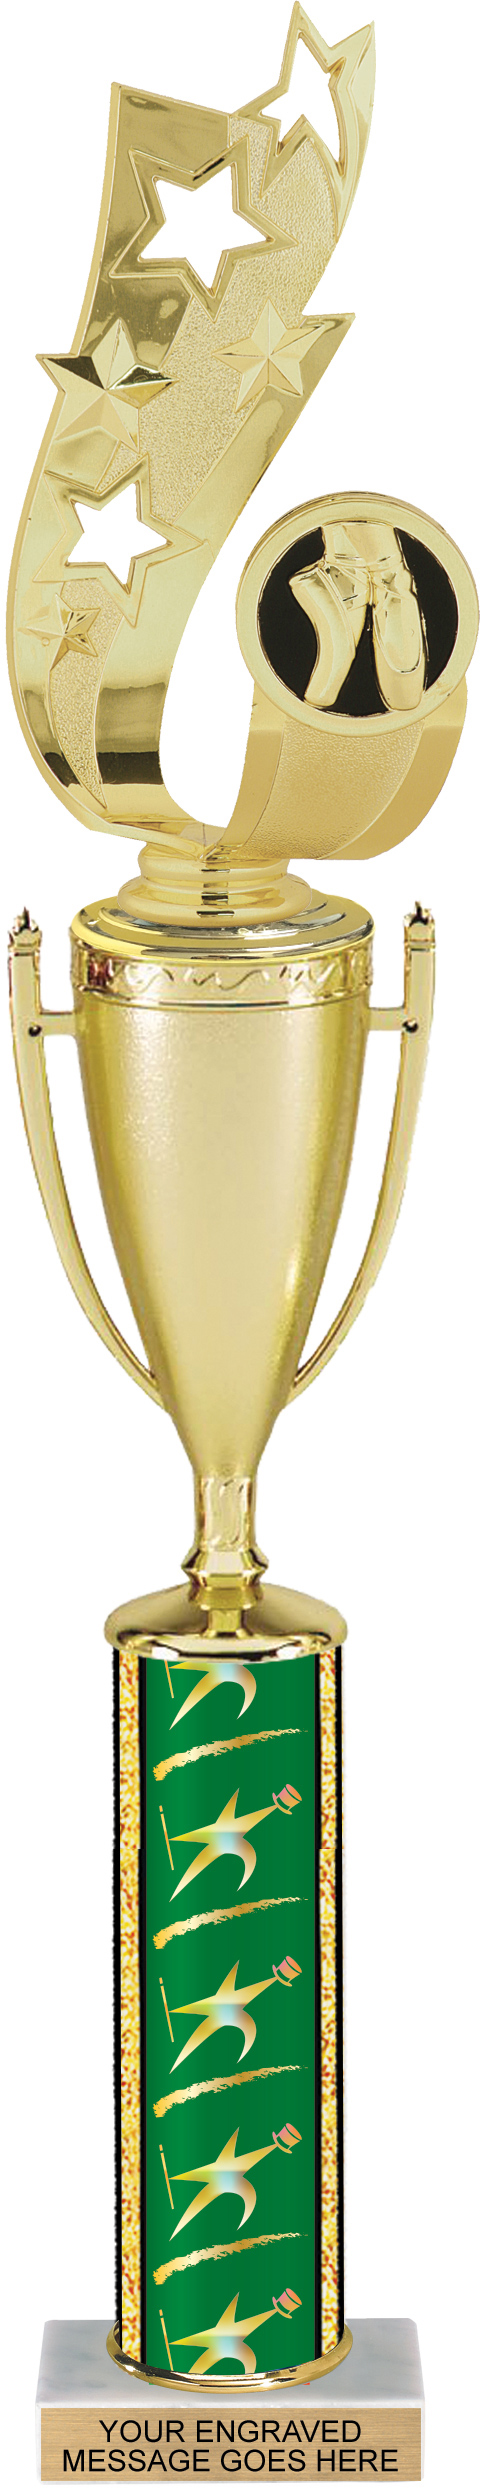 Star Dancer Column Cup Trophy - 17 inch